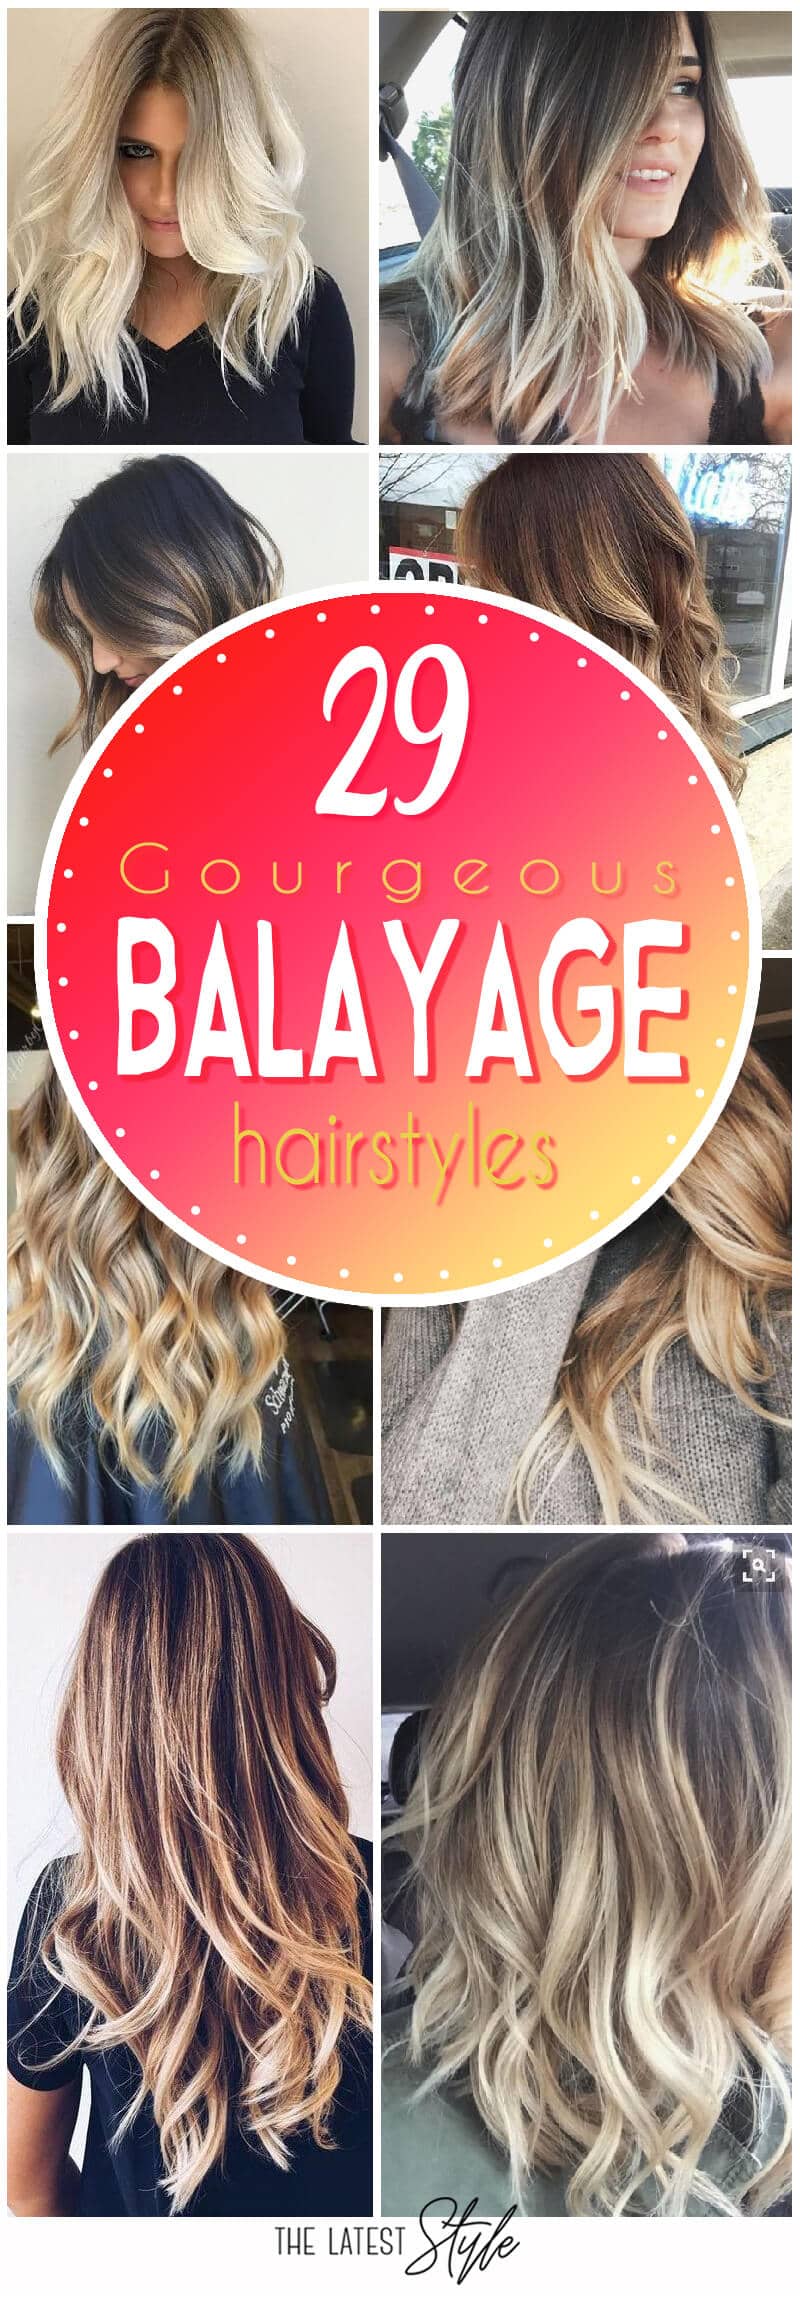 29 Gourgeous Balayage Hairstyles